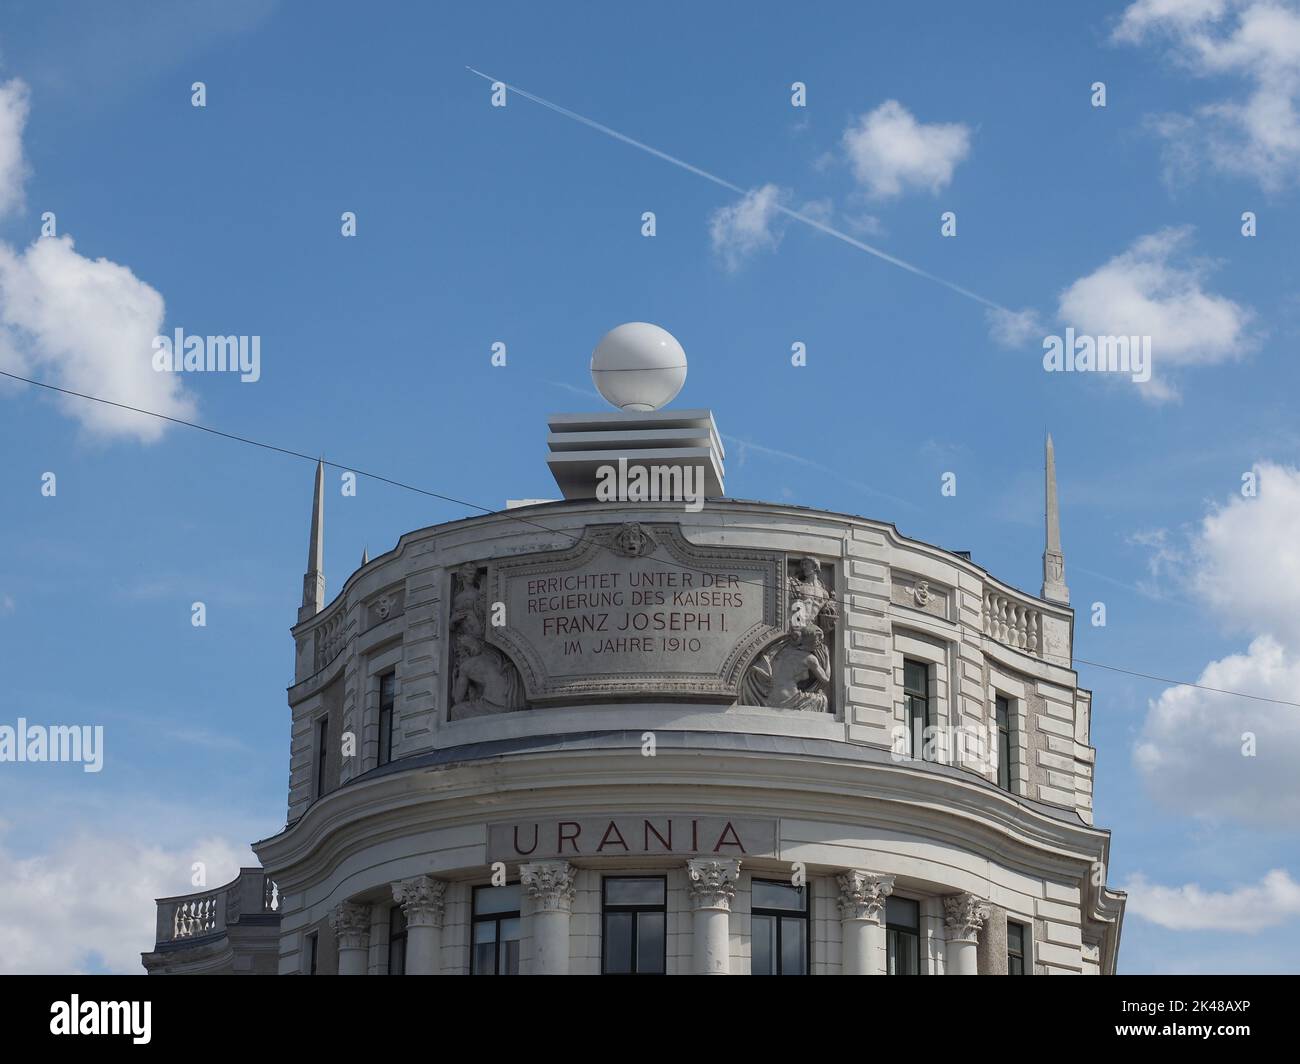 Urania Observatory translation built under the reign of Emperor Franz Joseph I in 1910 in Vienna, Austria Stock Photo